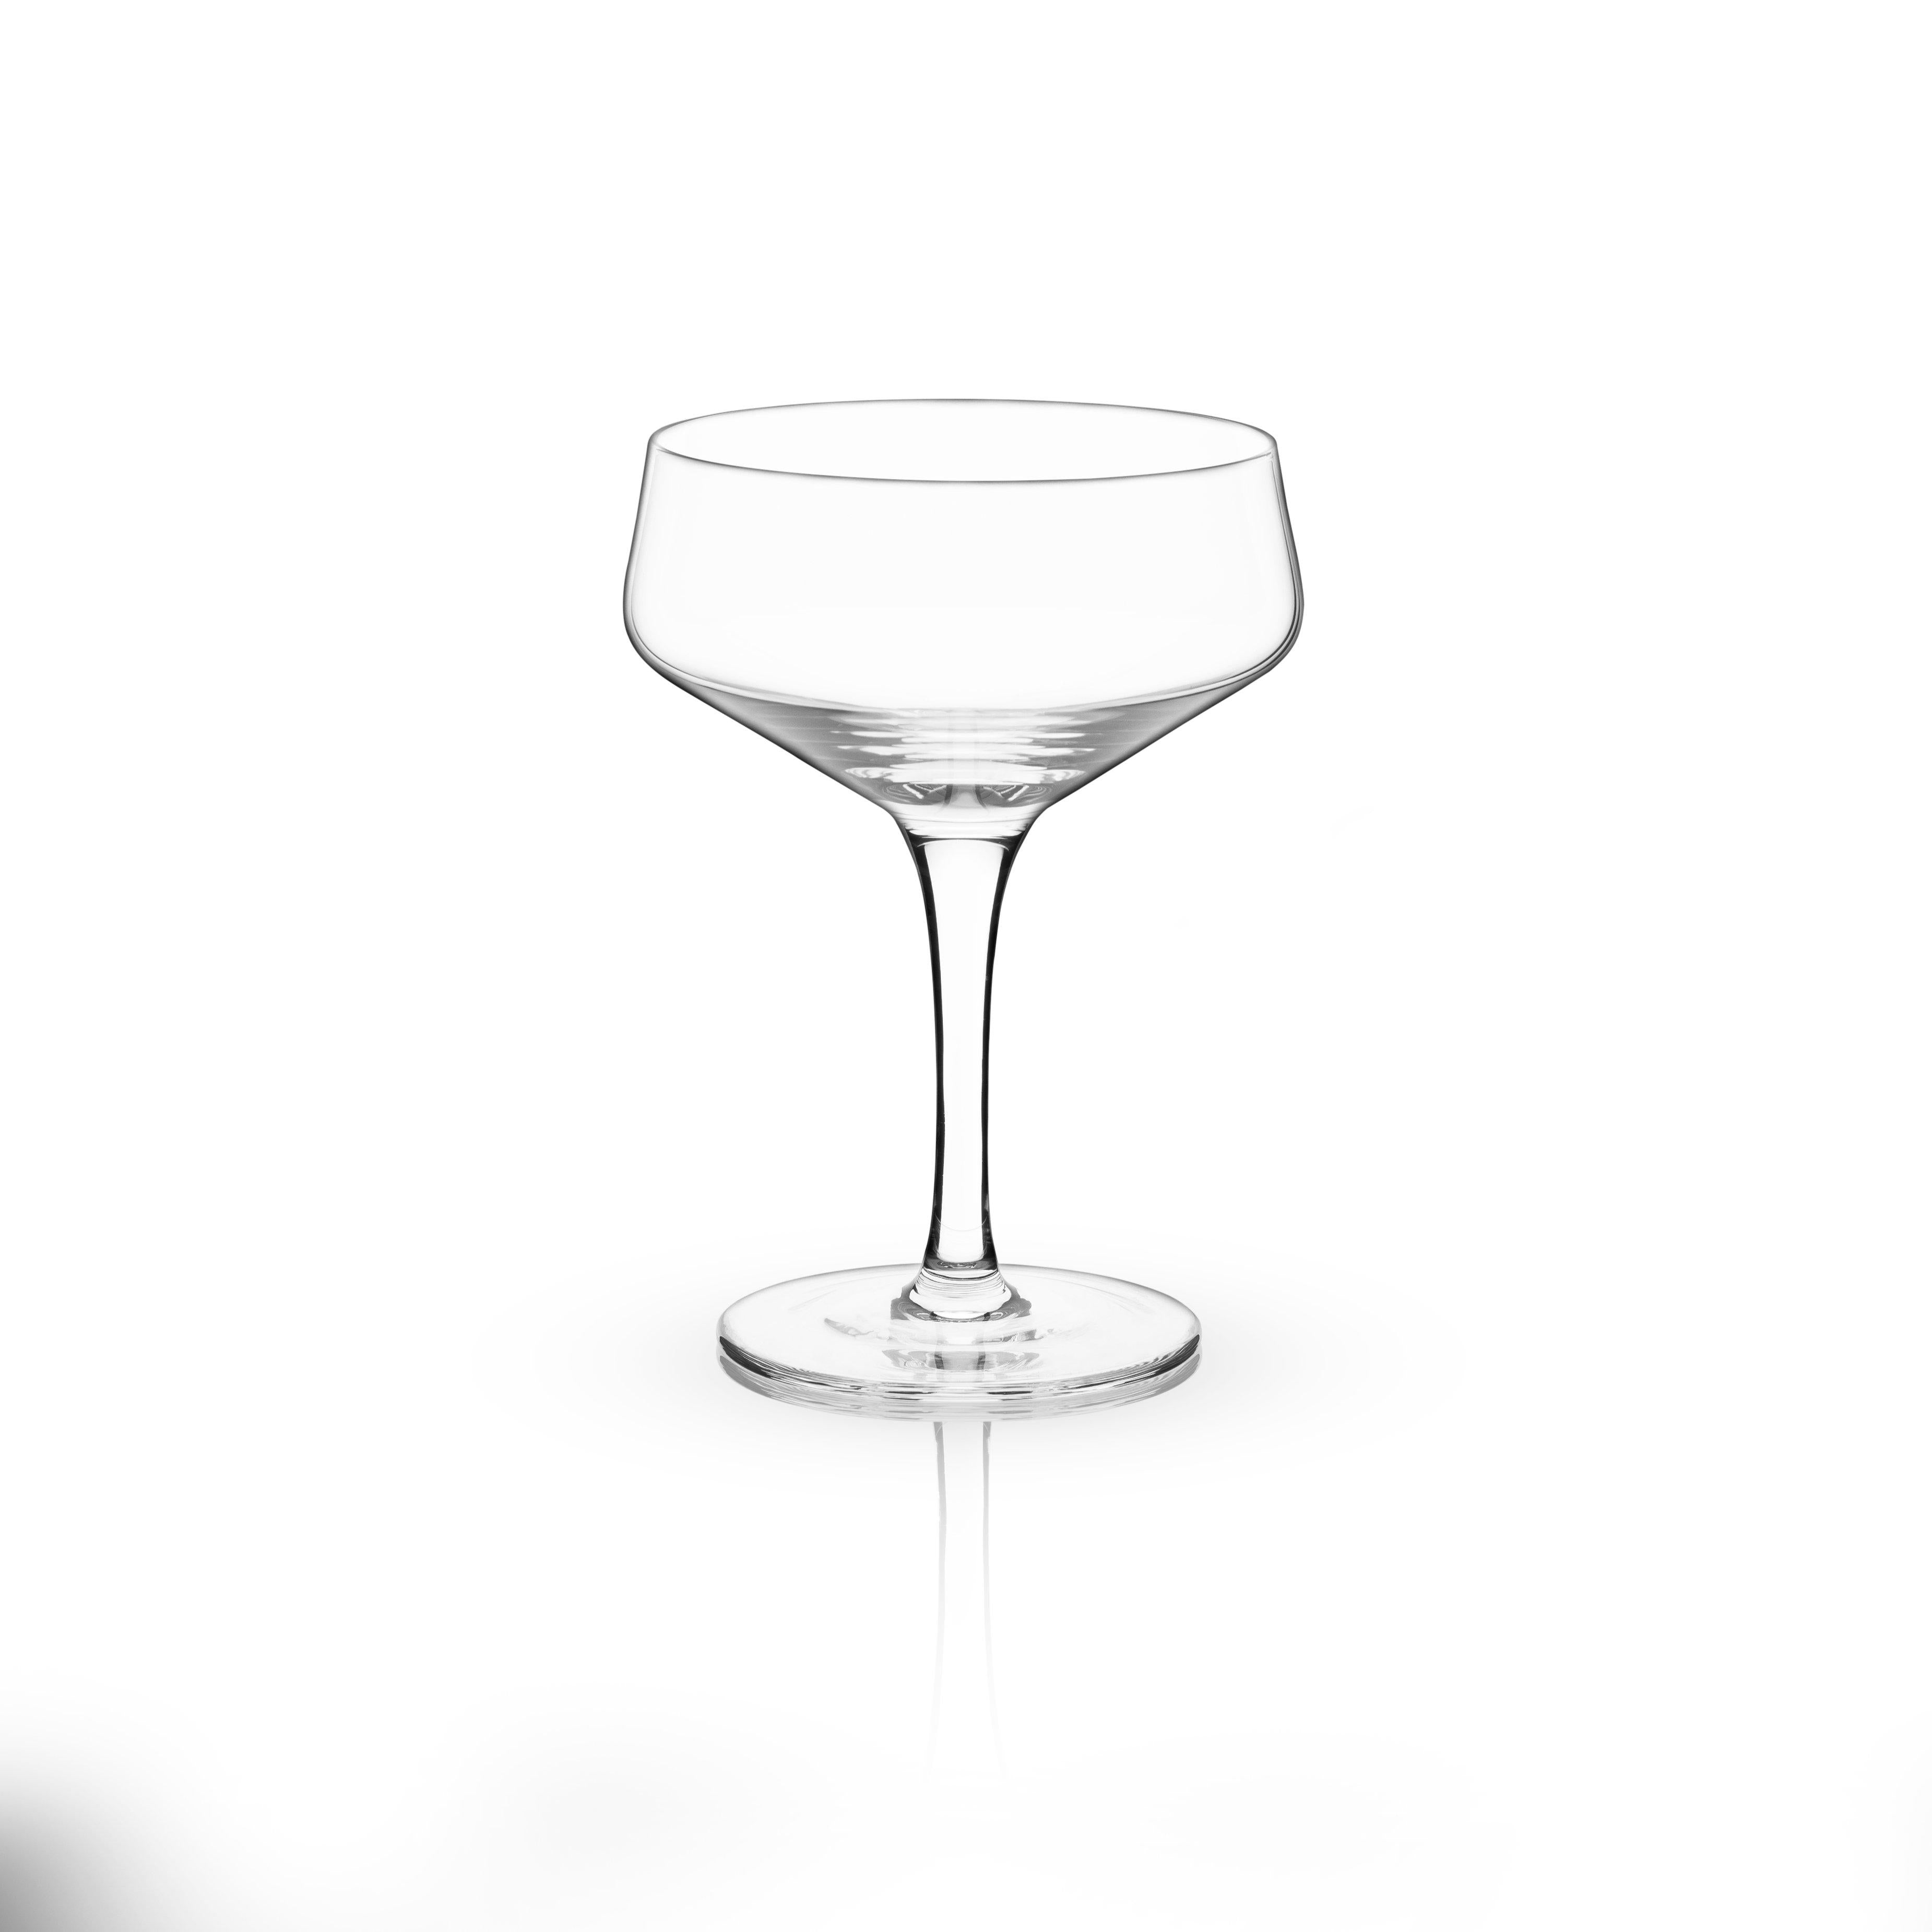 Dramson  Angled Crystal Coupe Glasses (Set of 2)